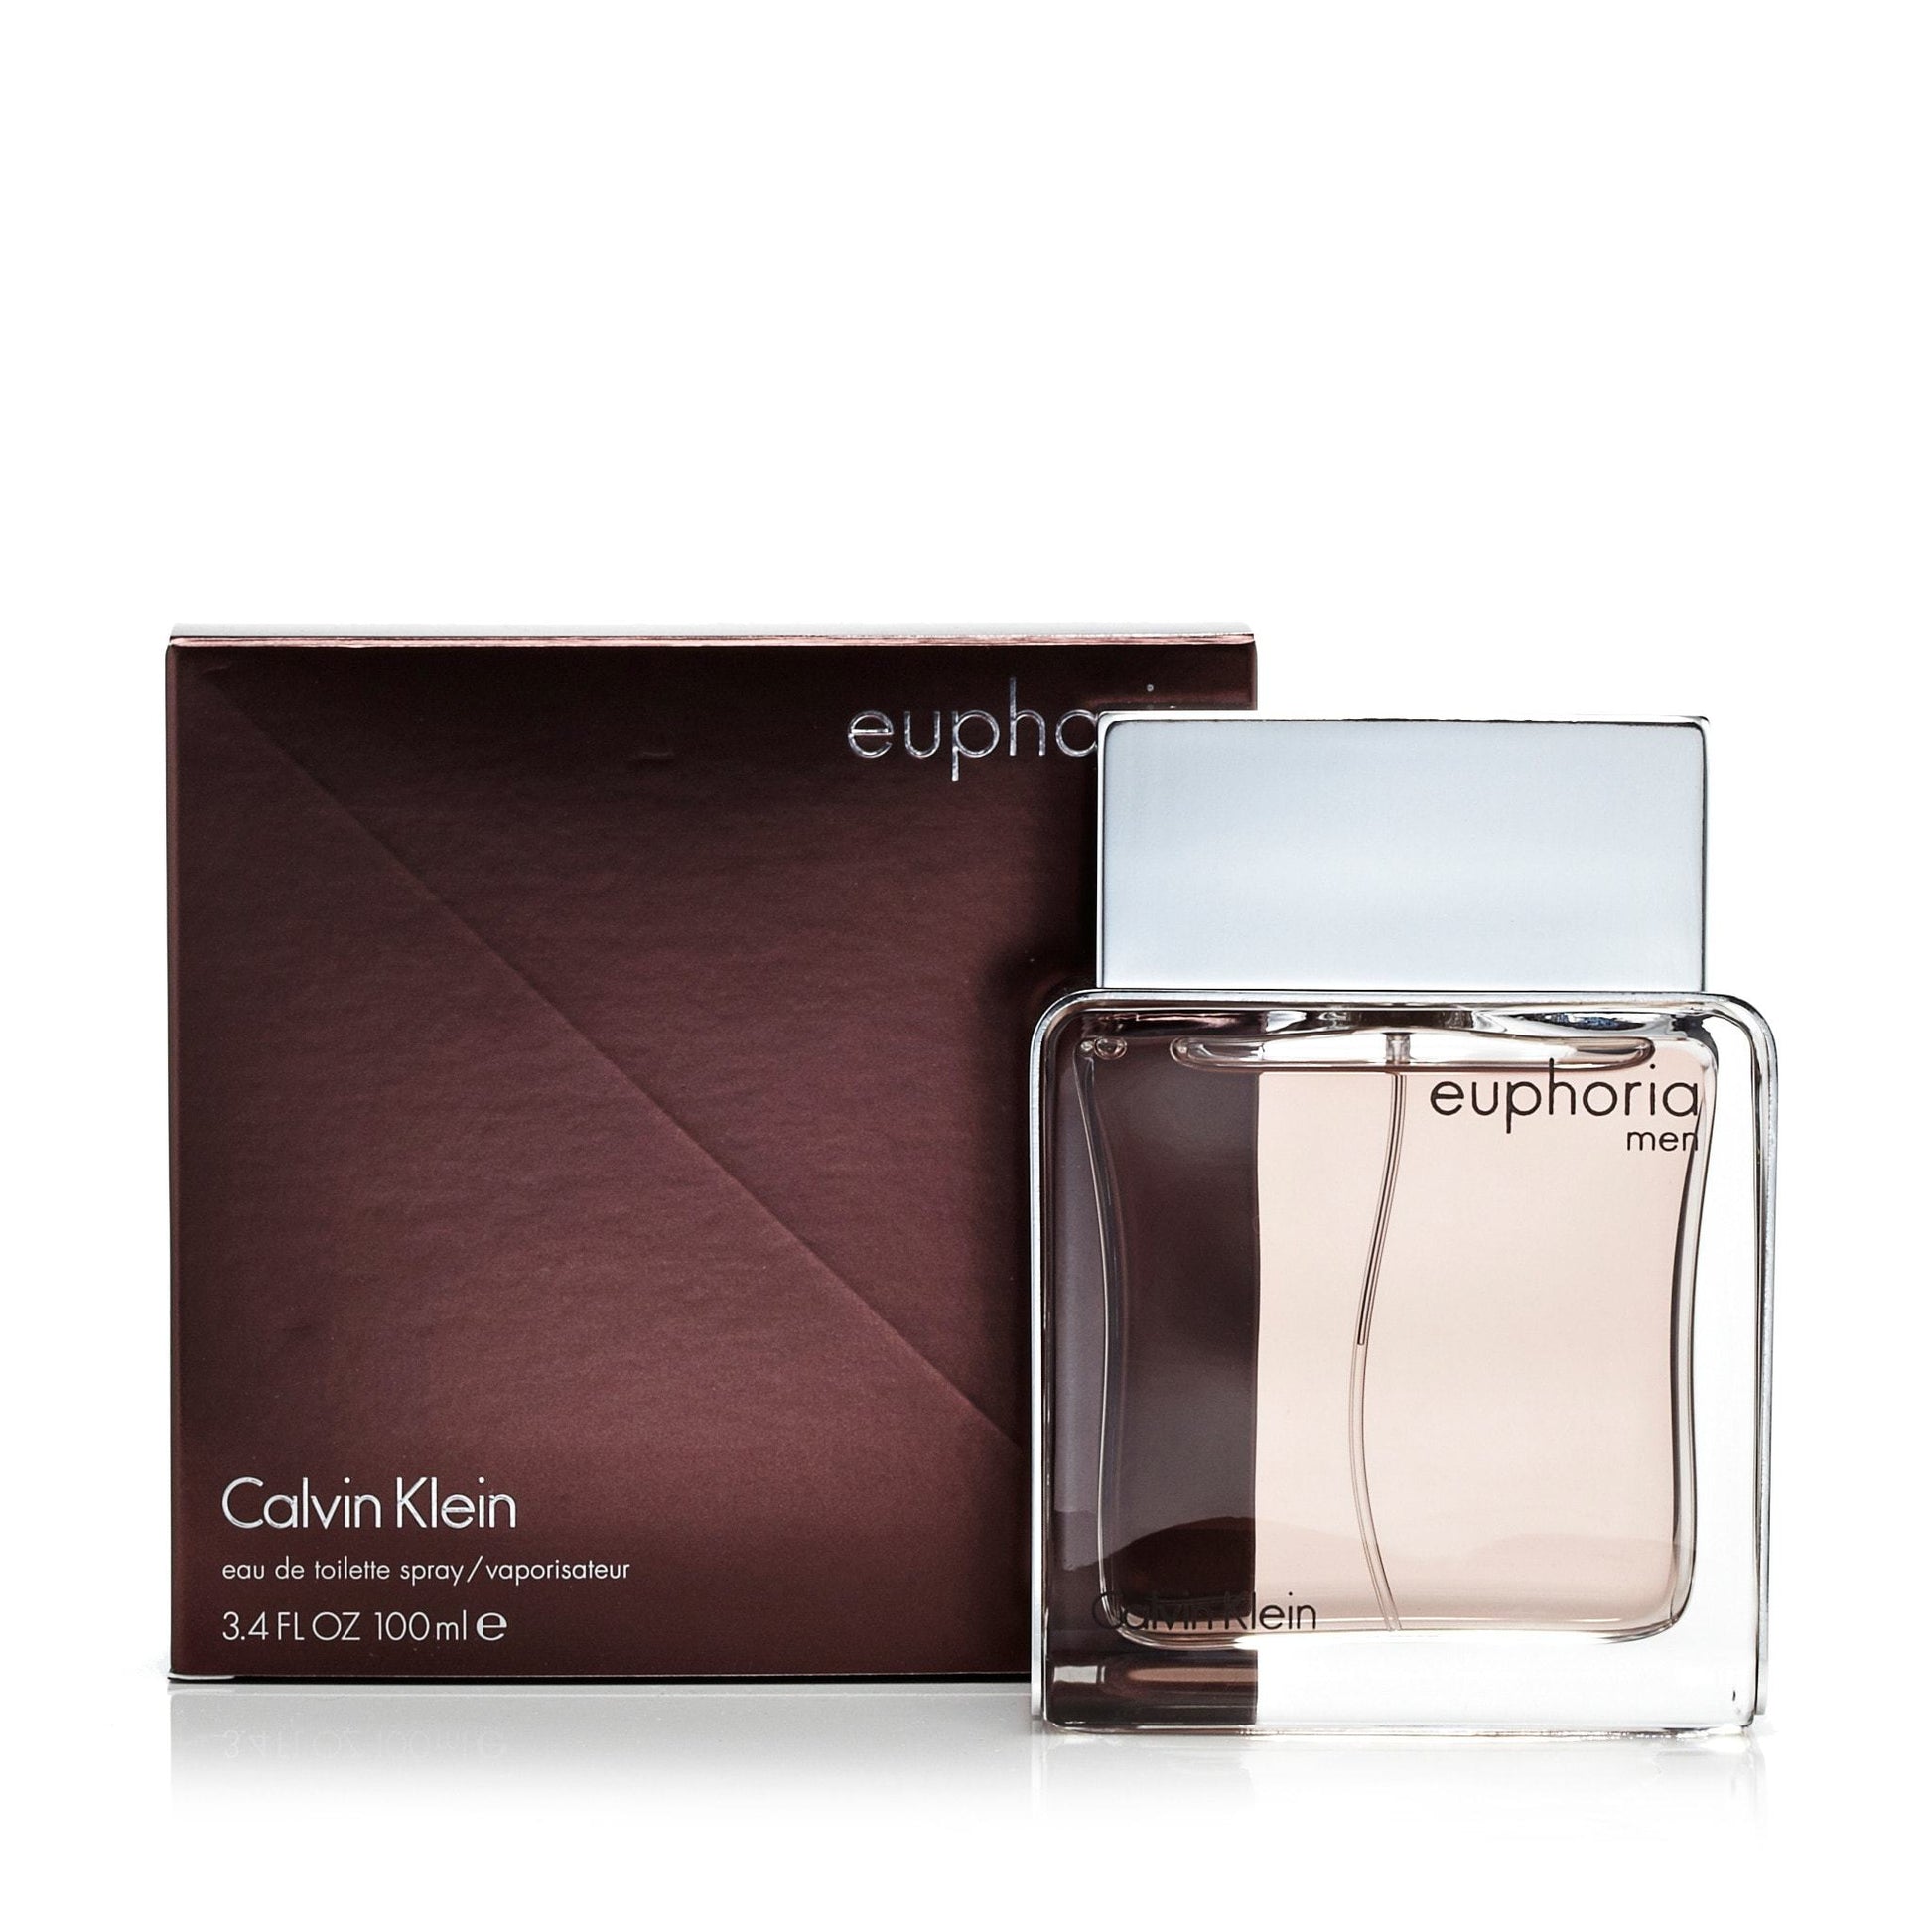 Euphoria Eau de Toilette Spray for Men by Calvin Klein, Product image 6